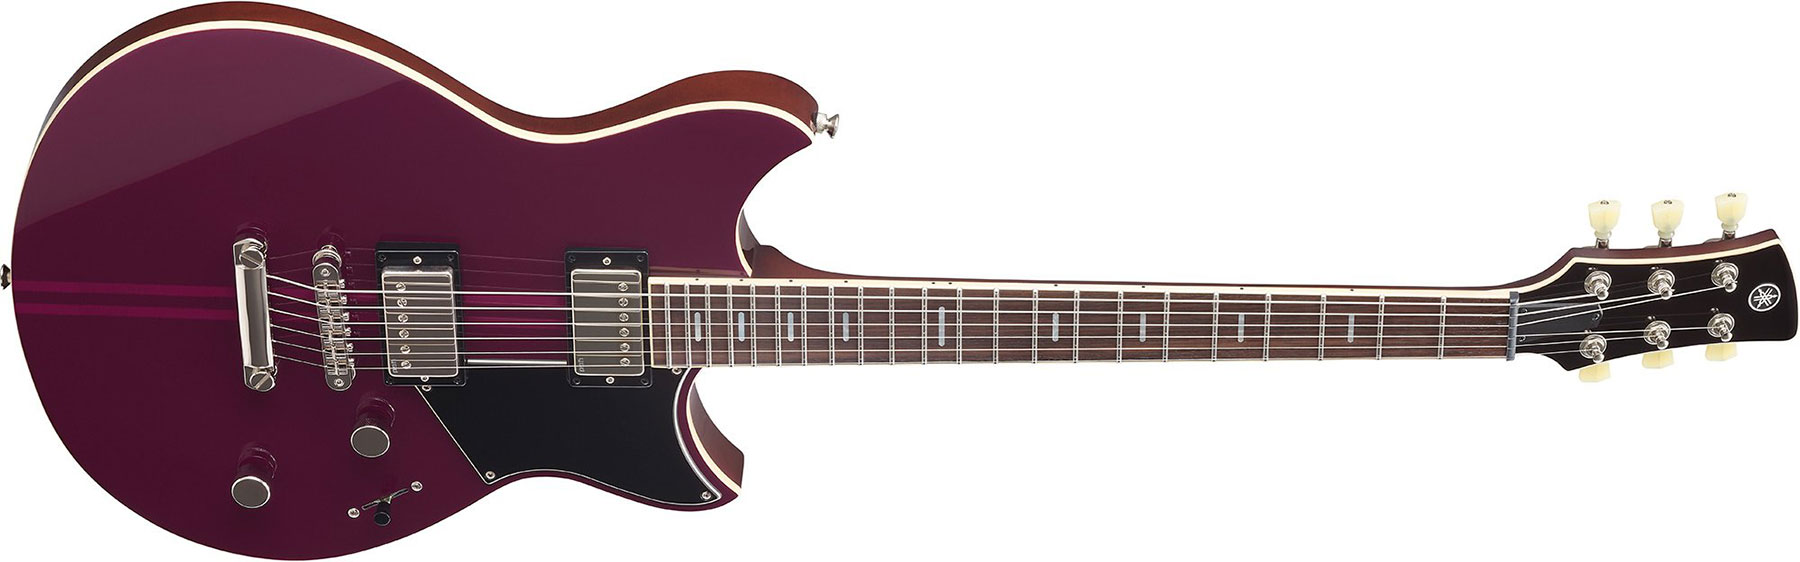 Yamaha Rss20 Revstar Standard Hh Ht Rw - Hot Merlot - Guitarra eléctrica de doble corte. - Variation 1